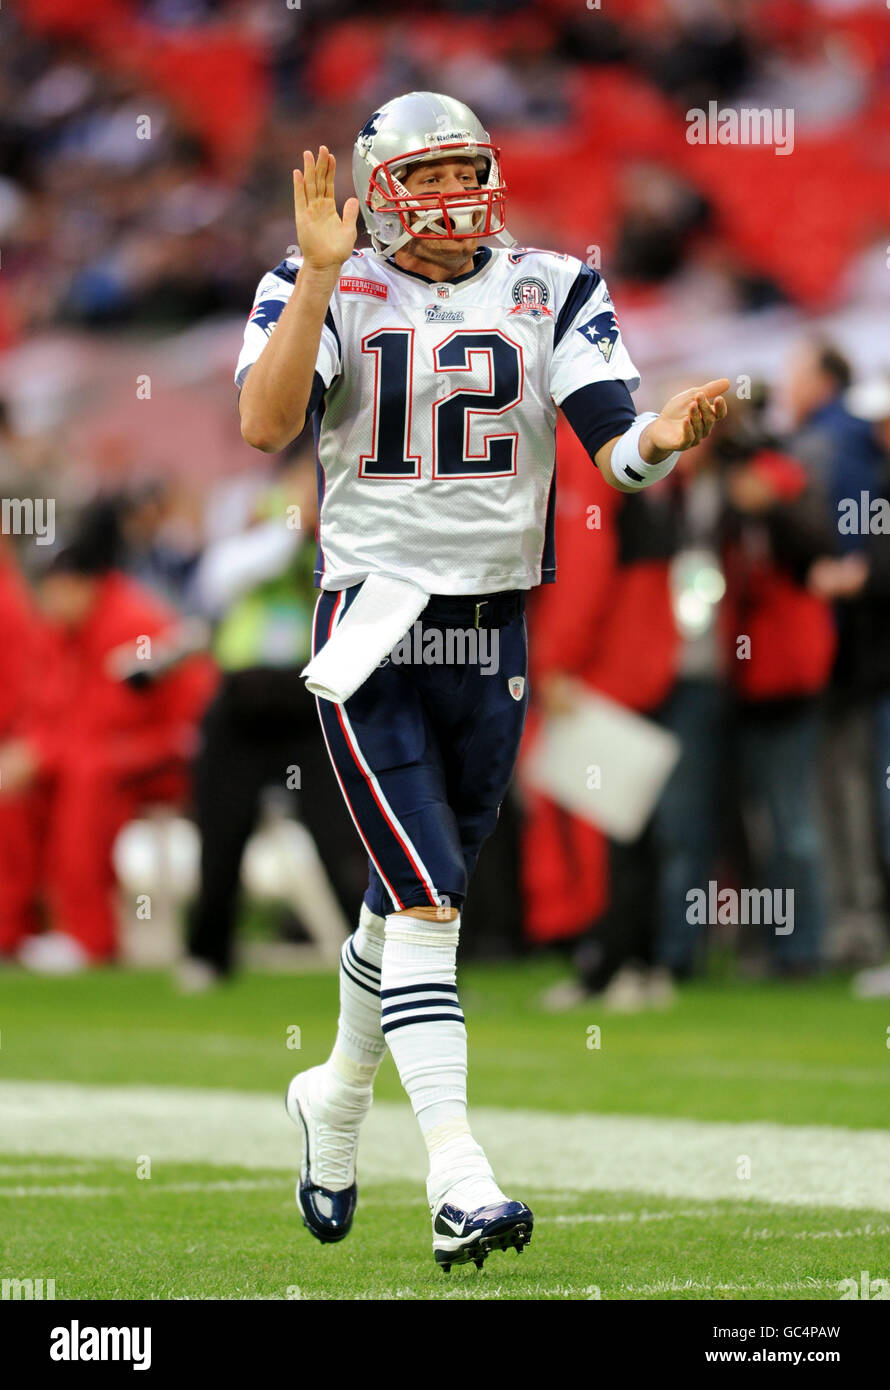 American Football - NFL - New England Patriots v Tampa Bay Buccaneers - Wembley Stadium. Tom Brady, Tampa Bay Buccaneers Stock Photo